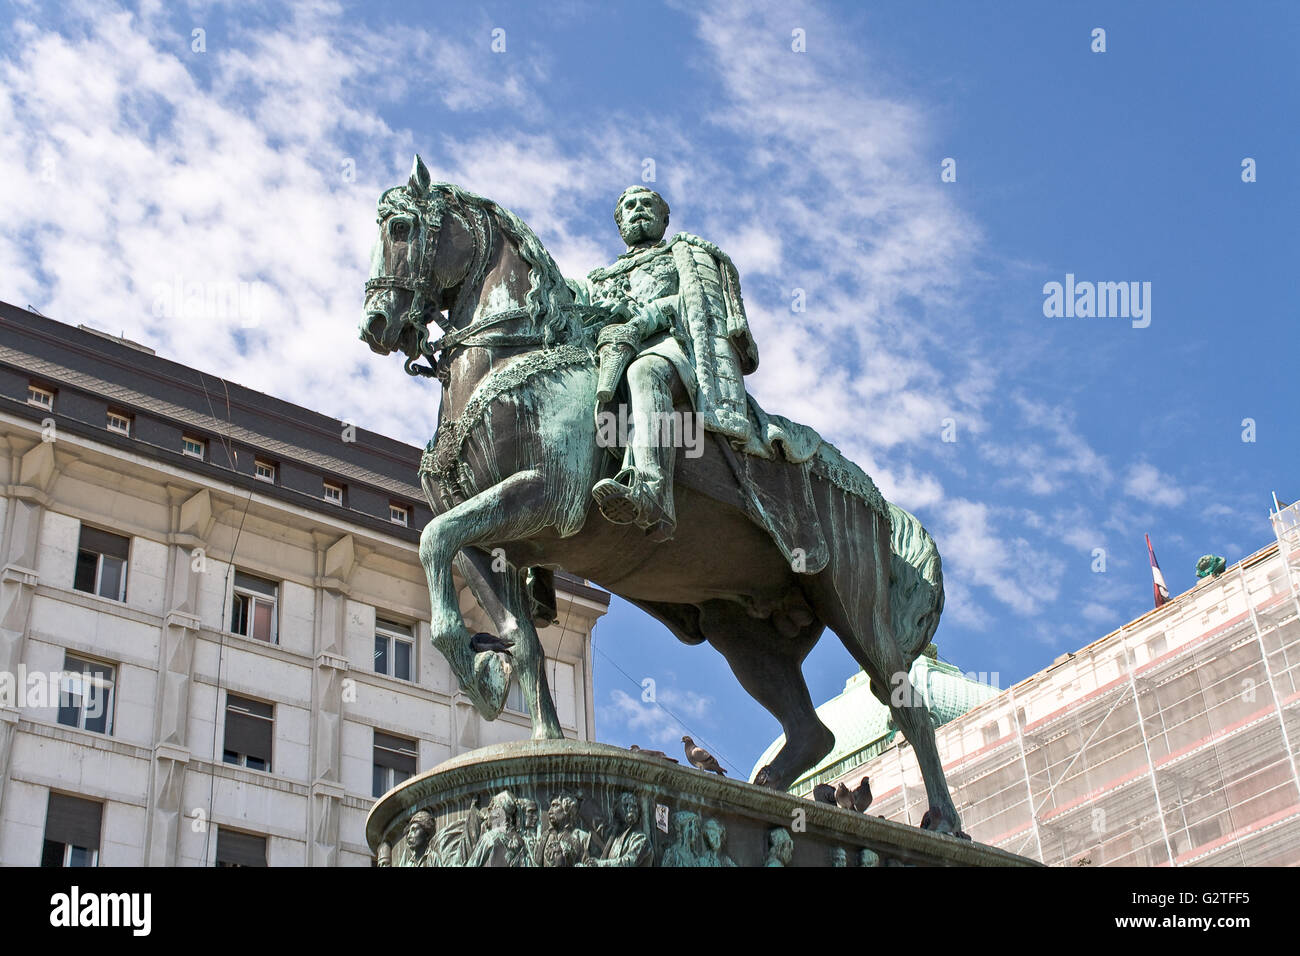 Statue of bronze horseman over blue sky Stock Photo